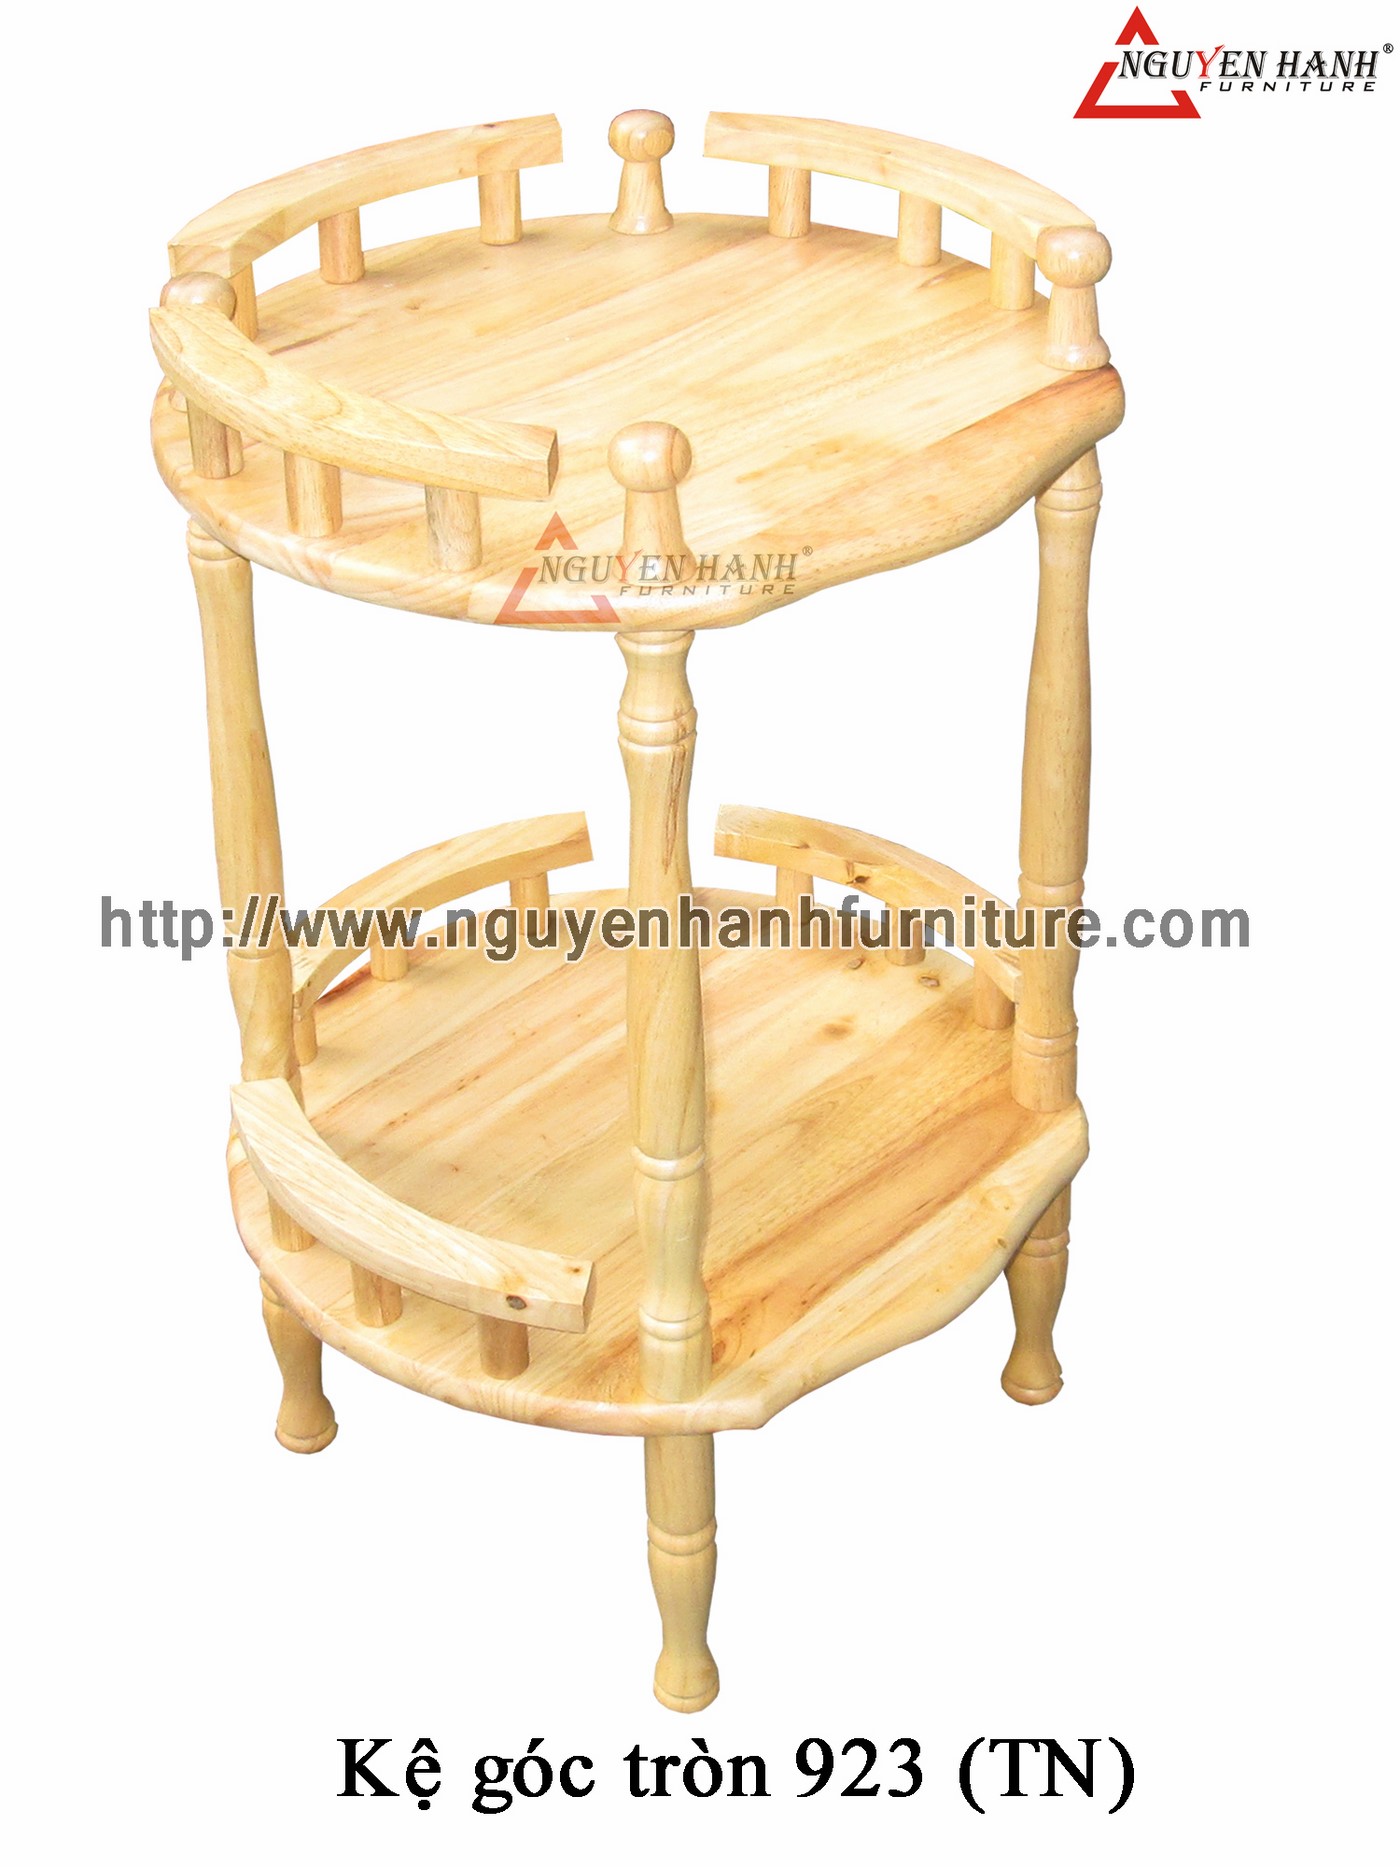 Name product: Round Corner Shelf 923 (Naturral) - Dimensions: 68 x 38 - Description: Wood natural rubber